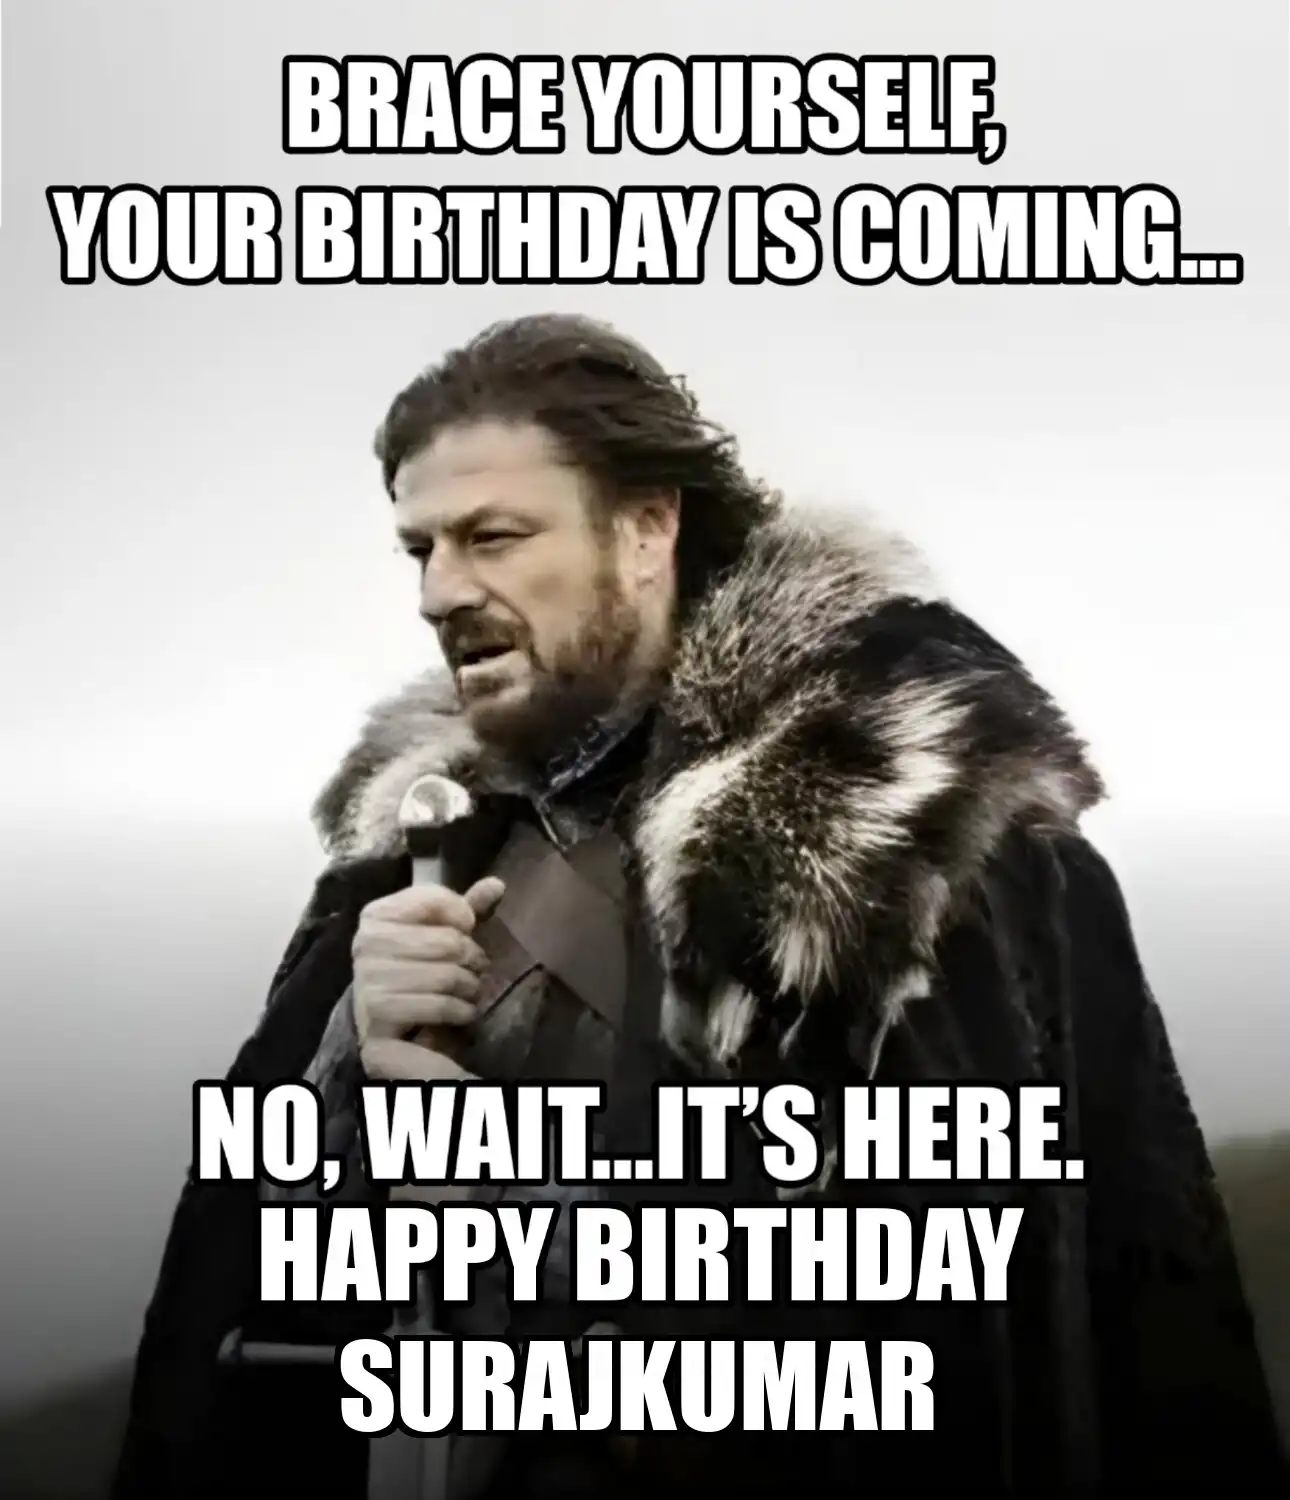 Happy Birthday Surajkumar Brace Yourself Your Birthday Is Coming Meme